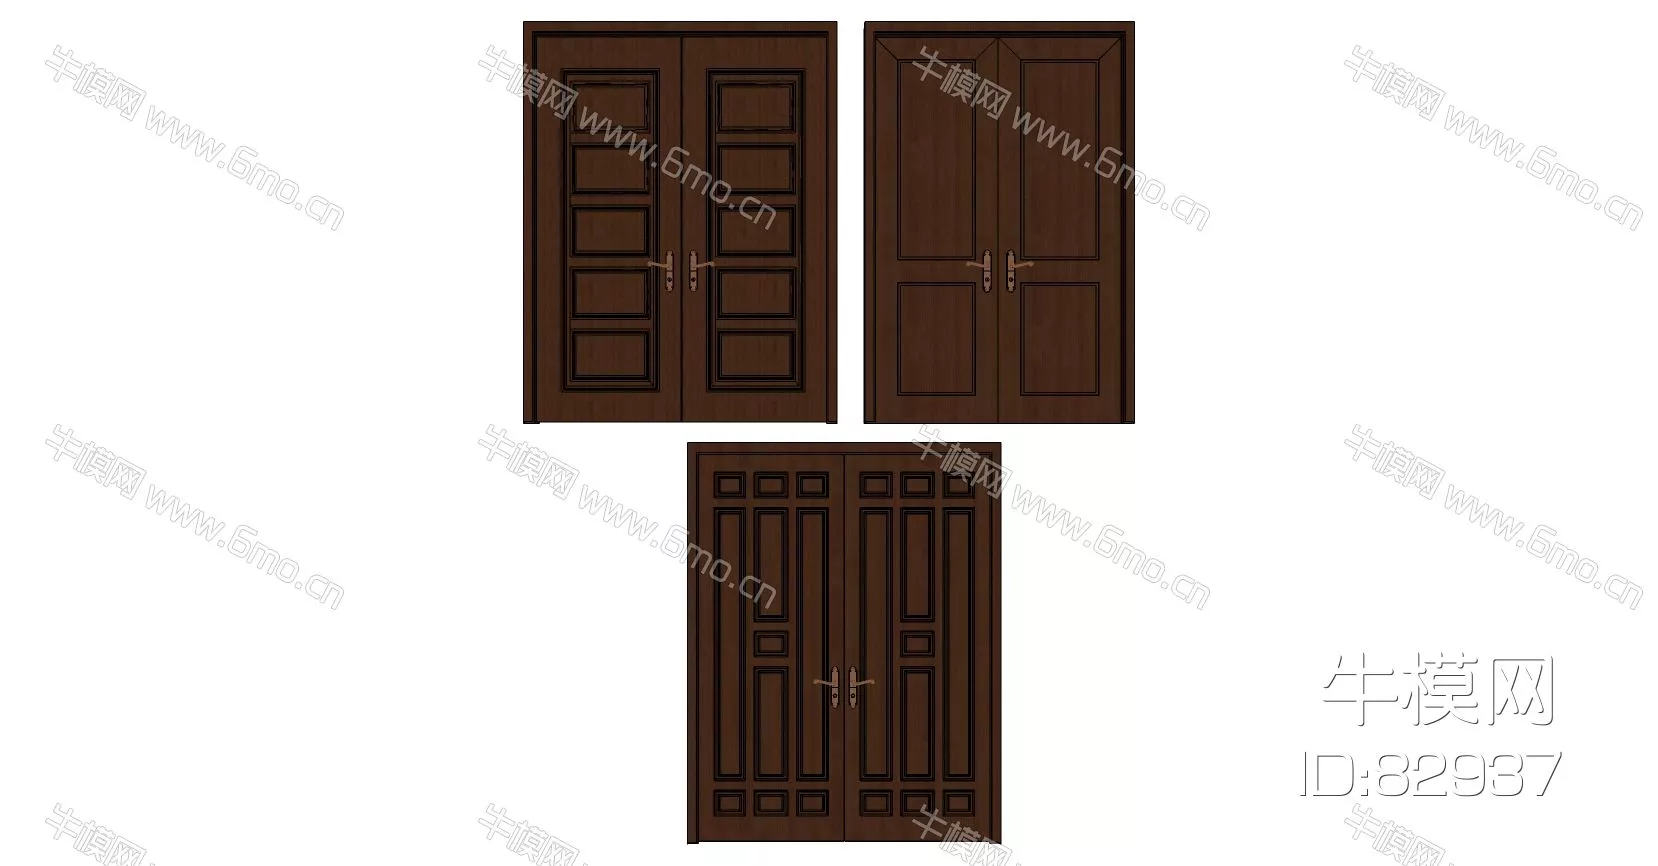 MODERN DOOR AND WINDOWS - SKETCHUP 3D MODEL - ENSCAPE - 82937